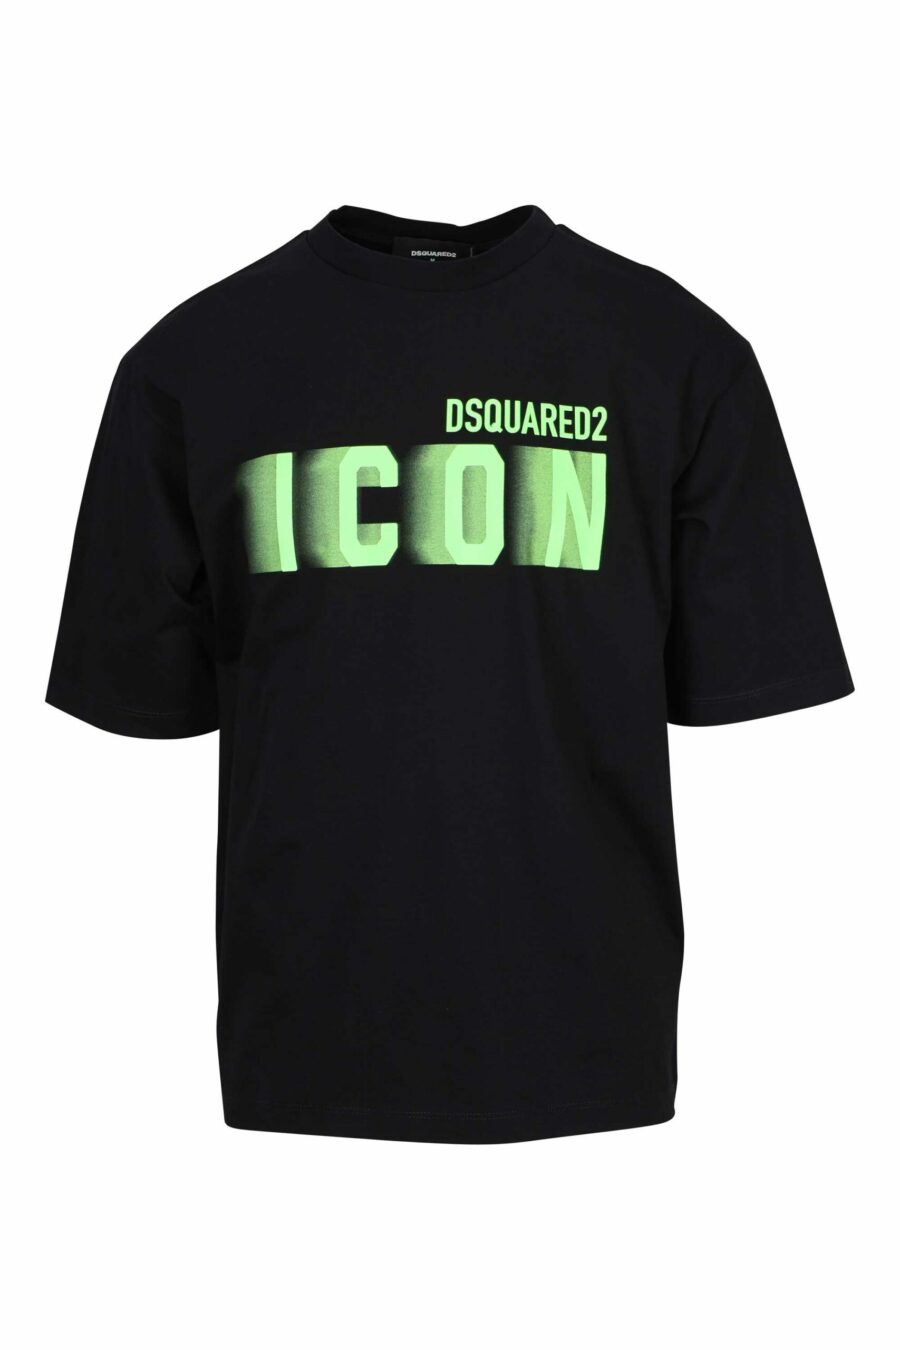 Camiseta negra "oversize" con maxilogo "icon" verde neon borroso - 8054148359669 scaled